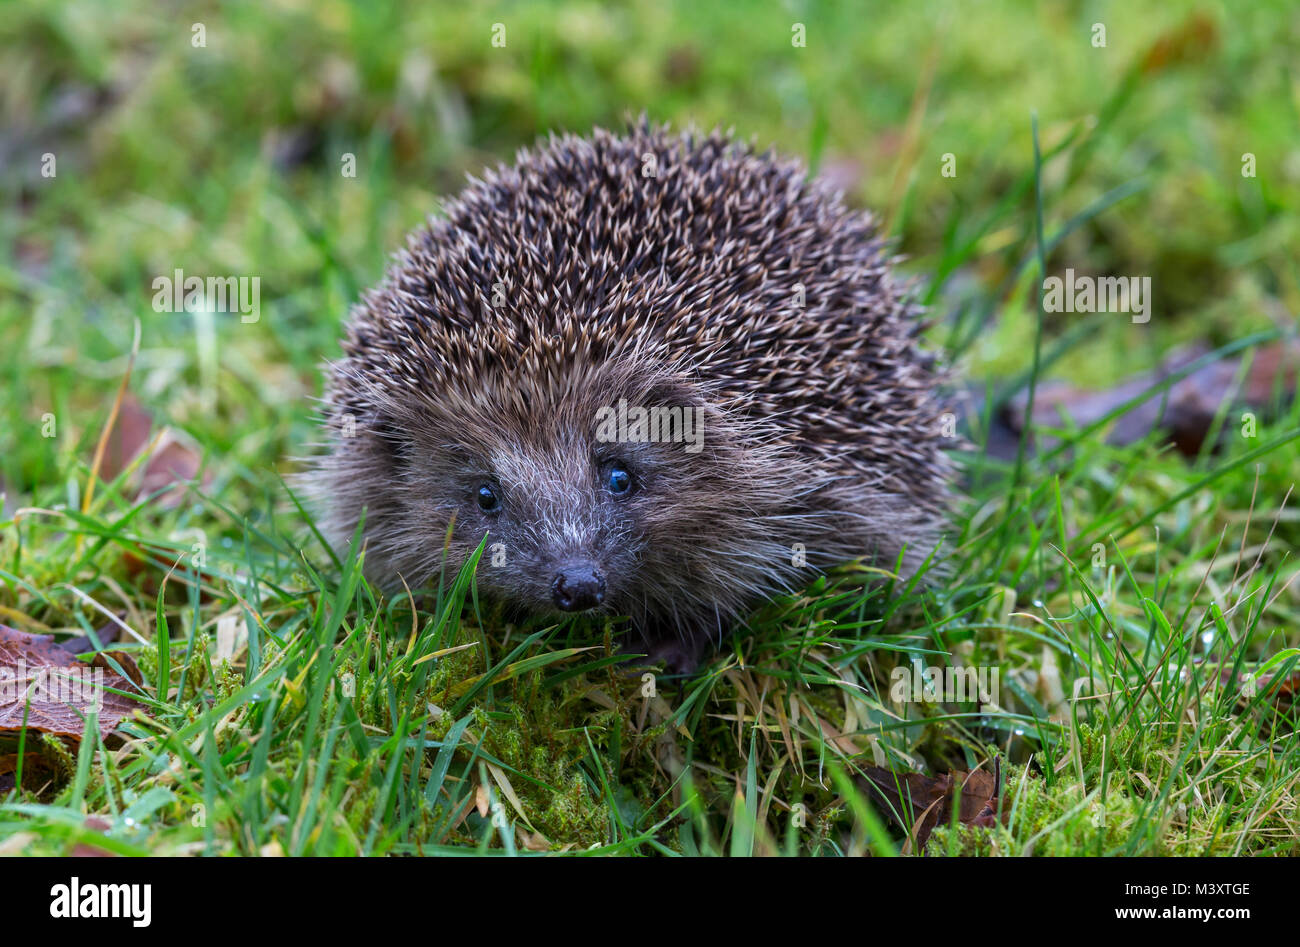 Hedgehog, Uk, wild, native hedgehog on green grass facing forwards Stock Photo